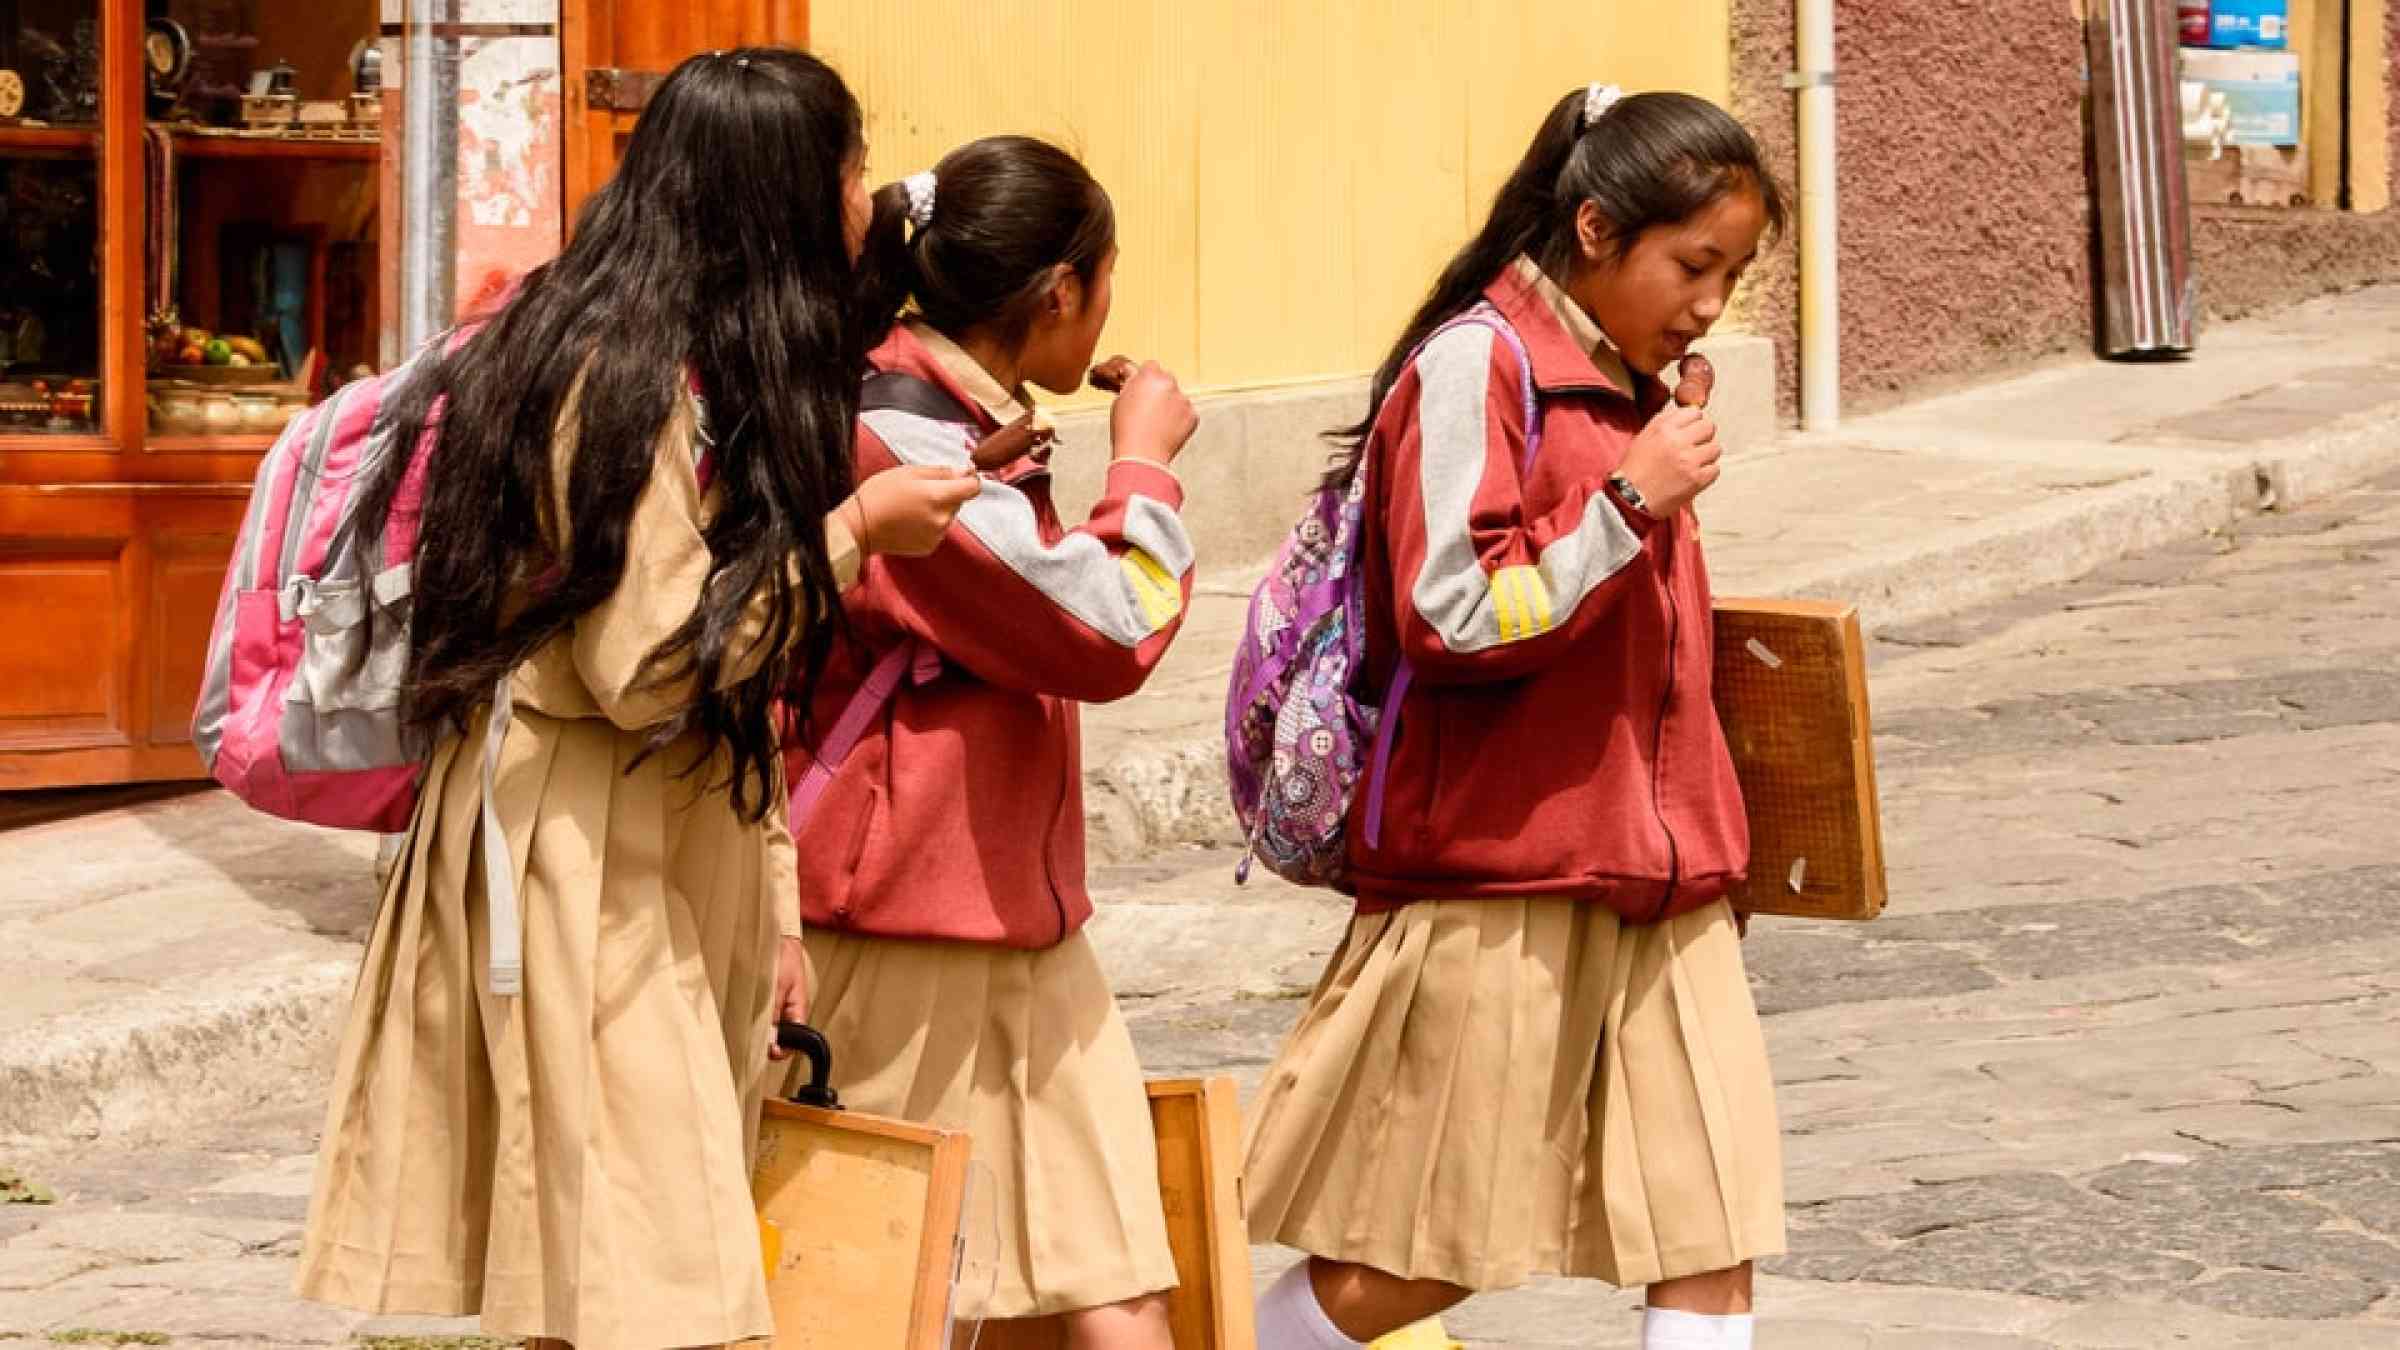 School girls walk in the street in Ecuador